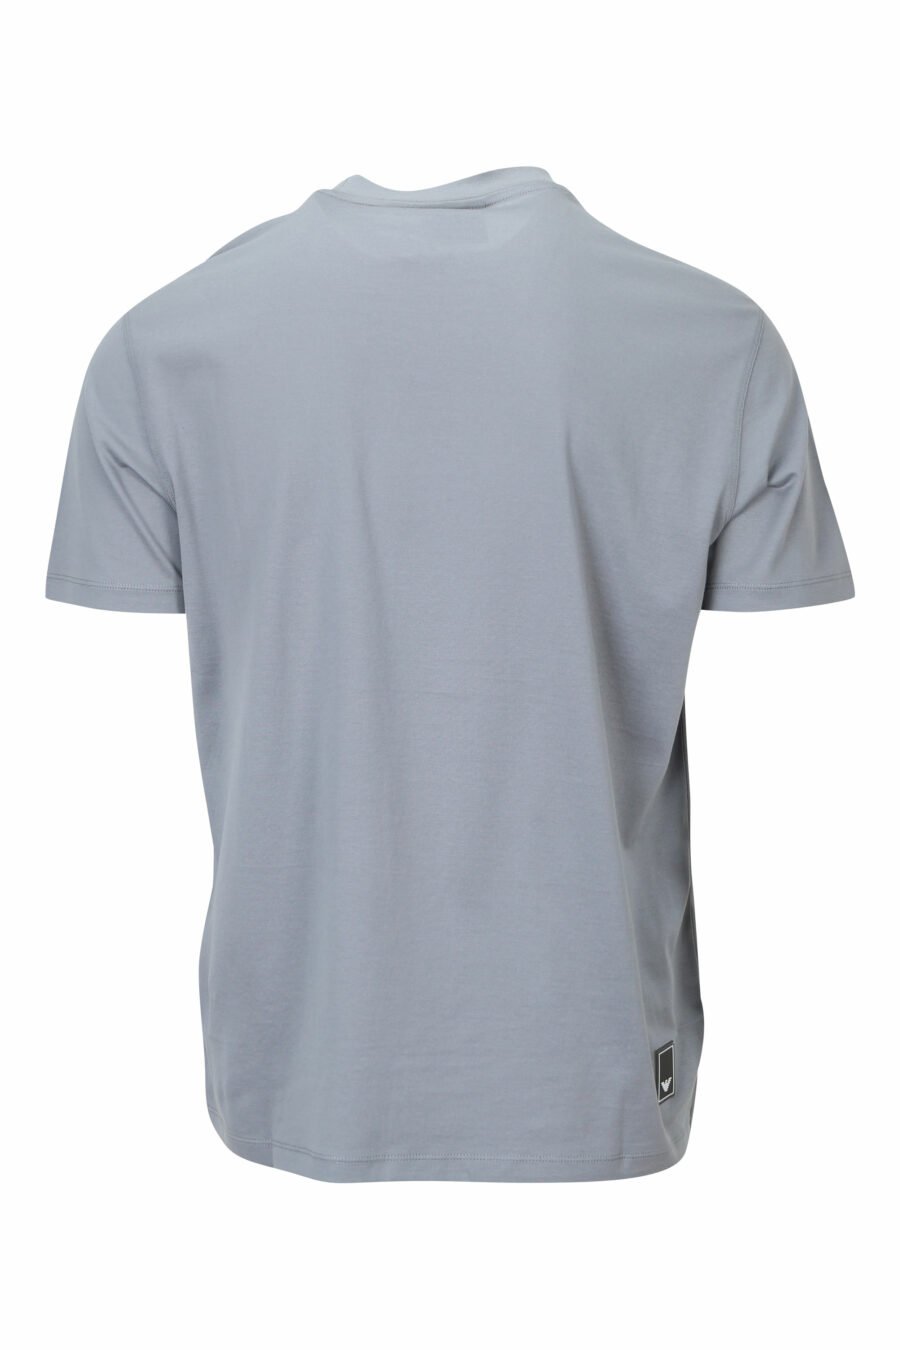 Camiseta gris con minilogo águila - 8058997158268 1